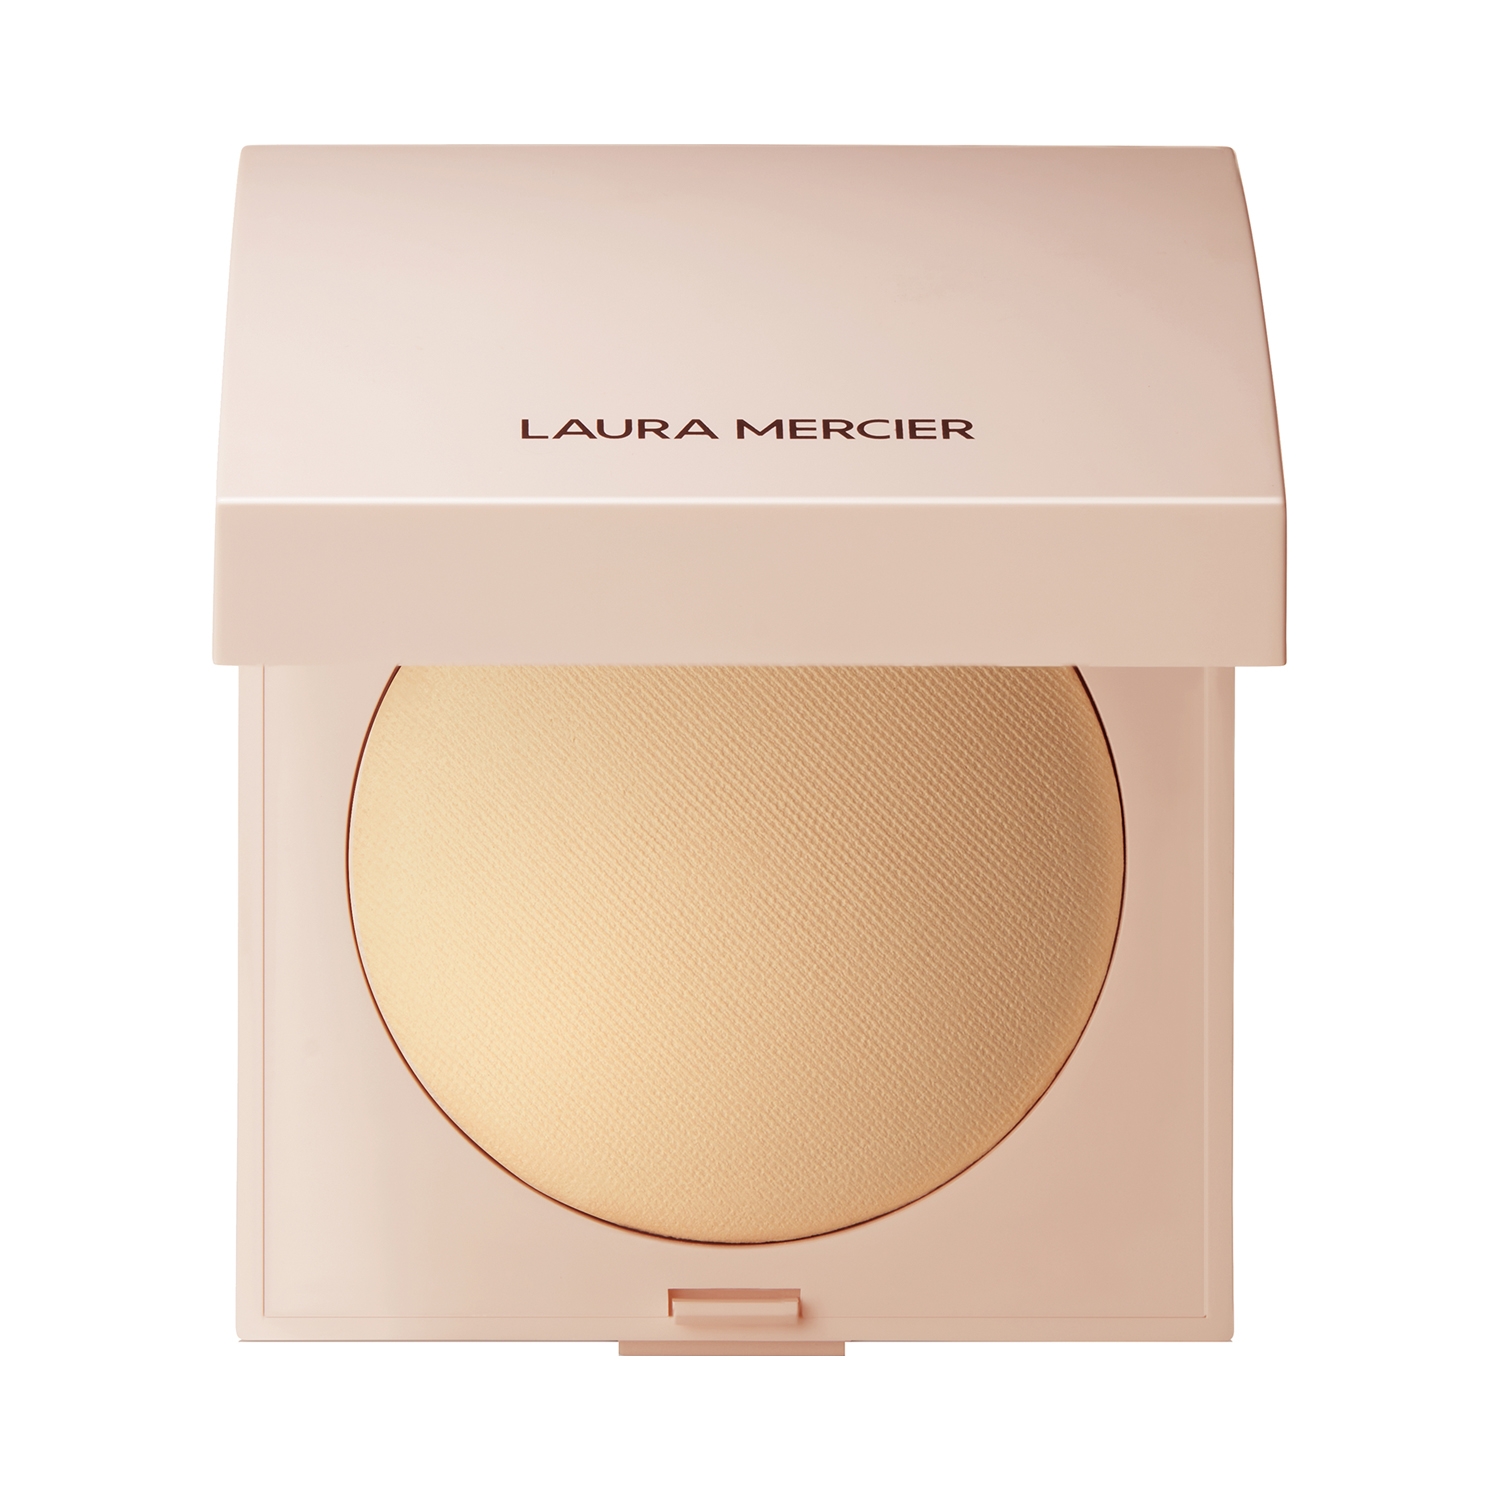 Laura Mercier | Laura Mercier Real Flawless Luminous Perfecting Pressed Powder - Translucent Honey​ (7g)